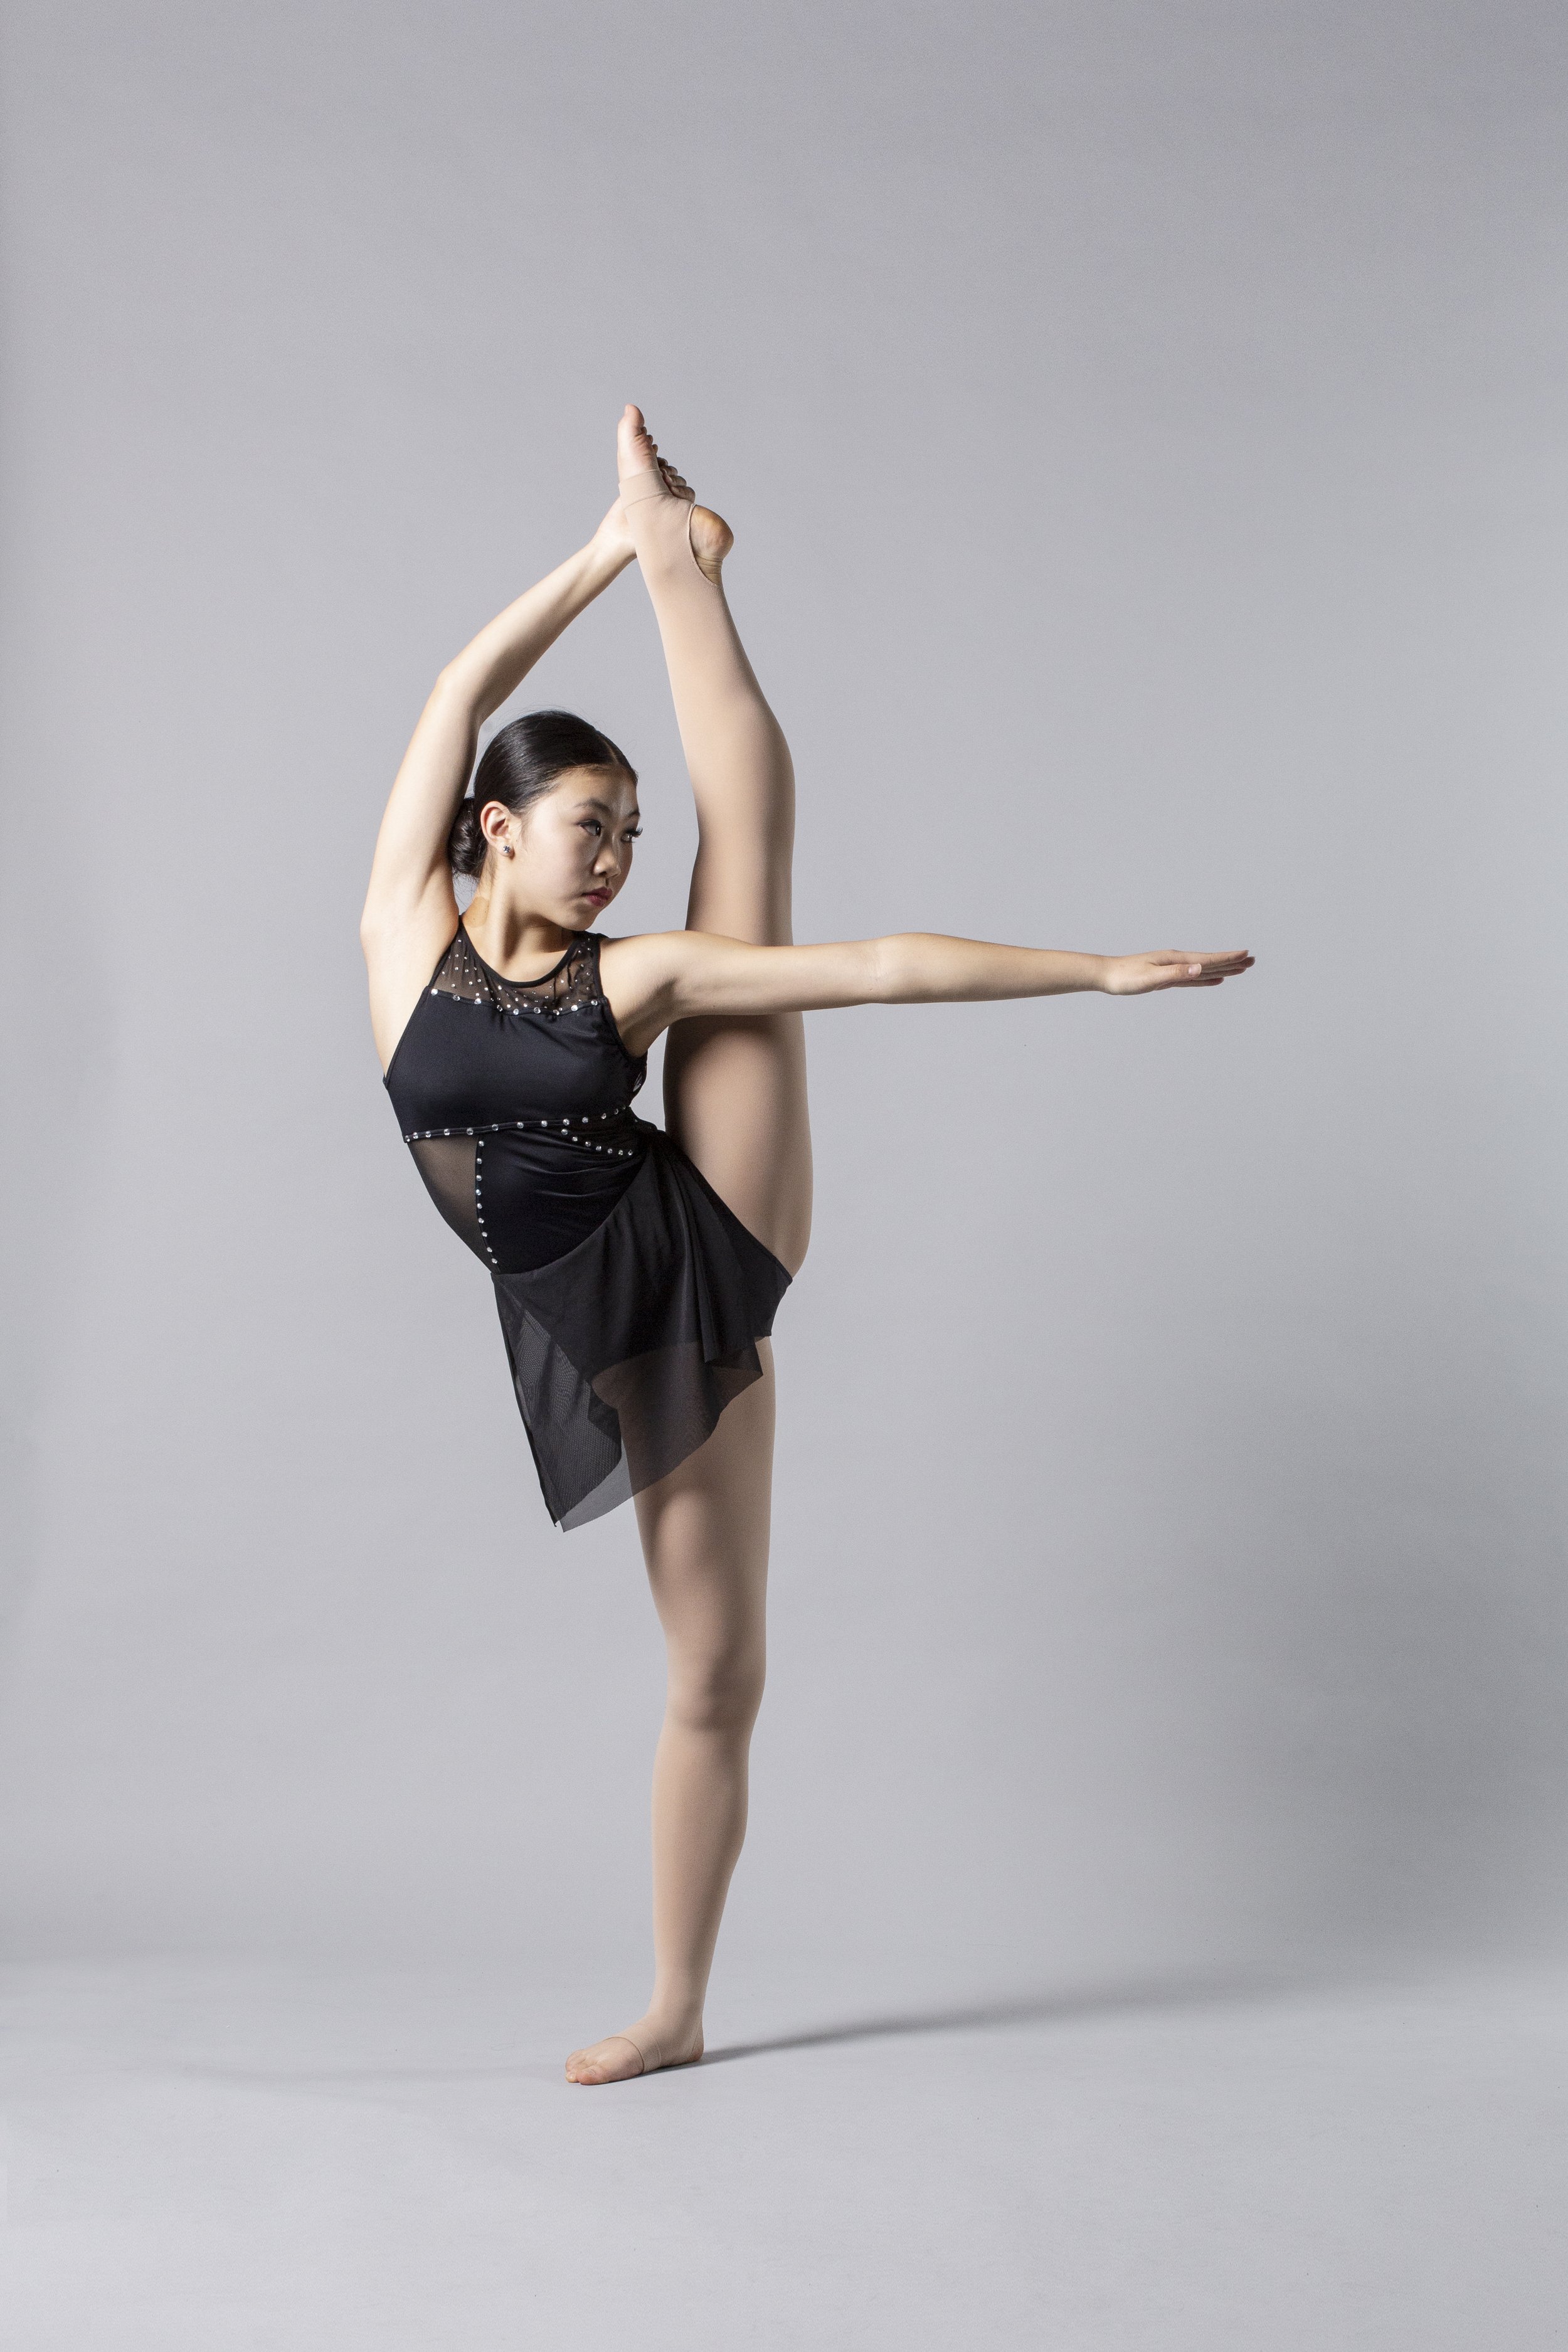 Dress Code — Coomer Ballet Conservatory